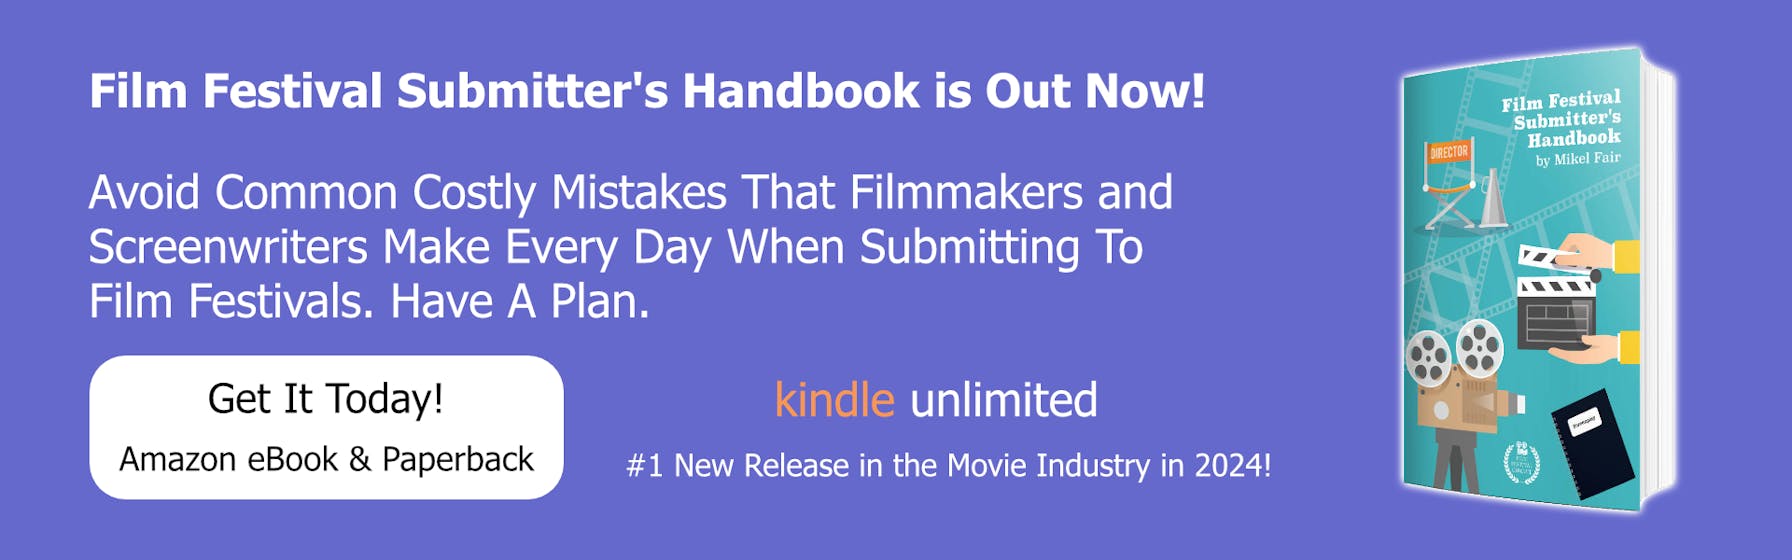 Film Festival Submitter's Handbook